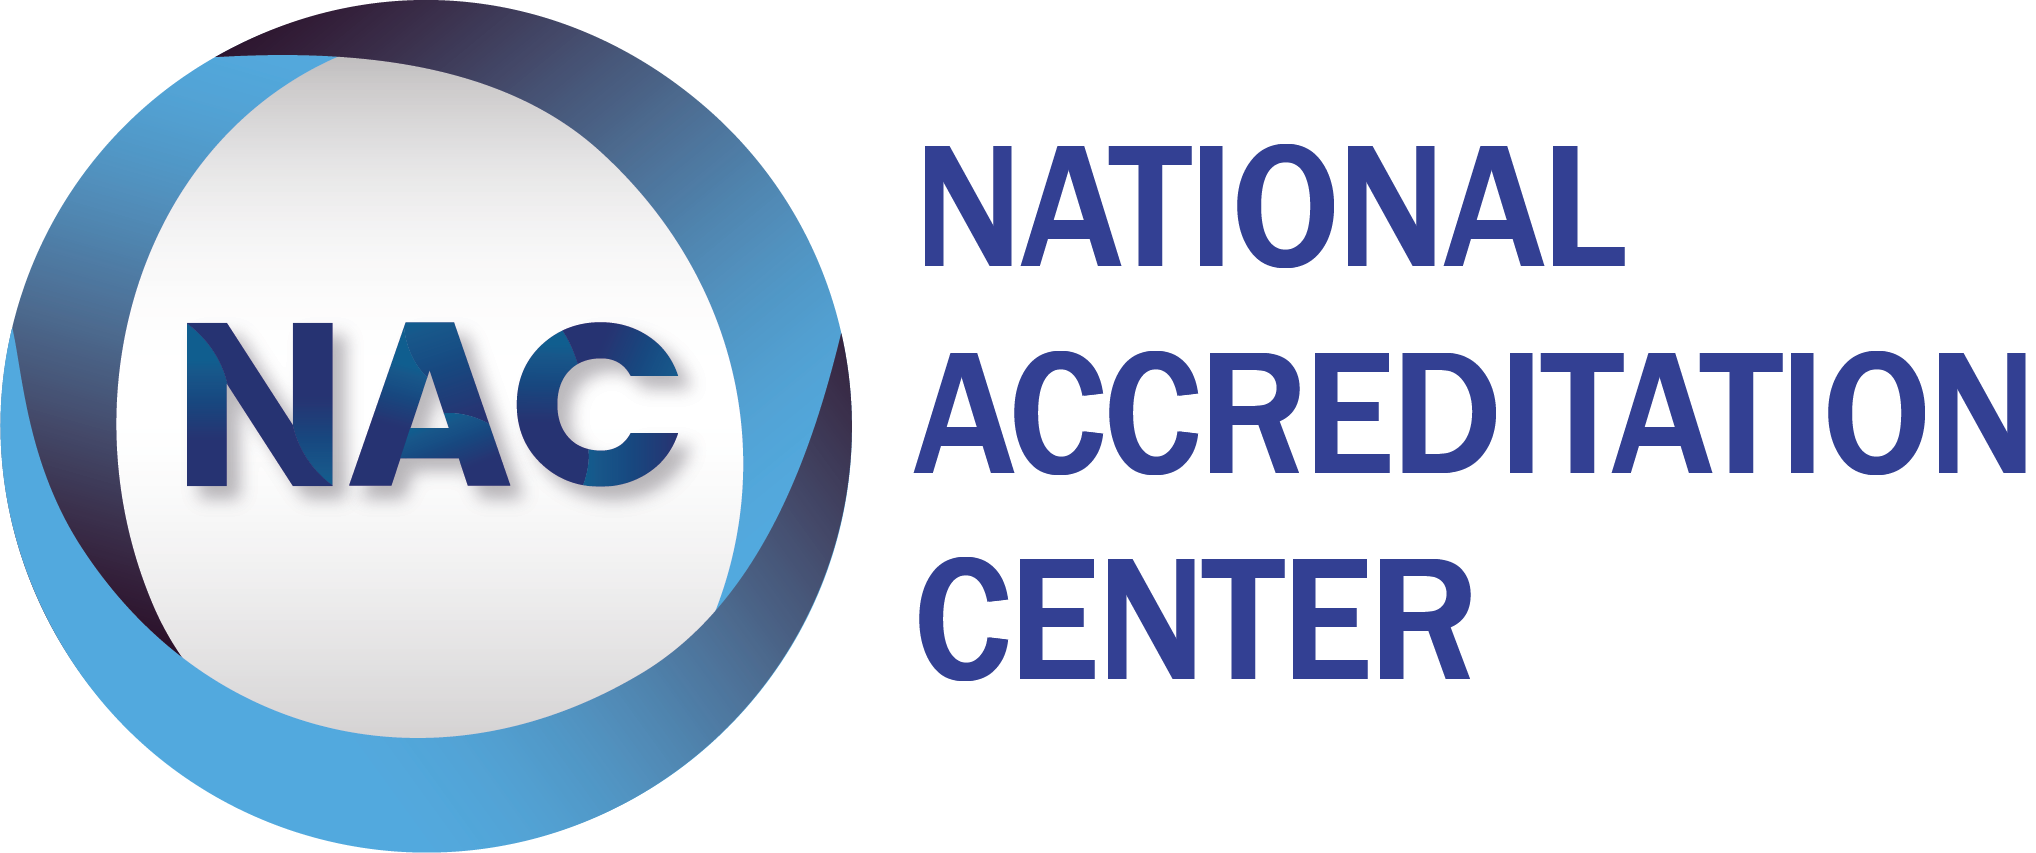 United States of America - National Accreditation Center (NAC)